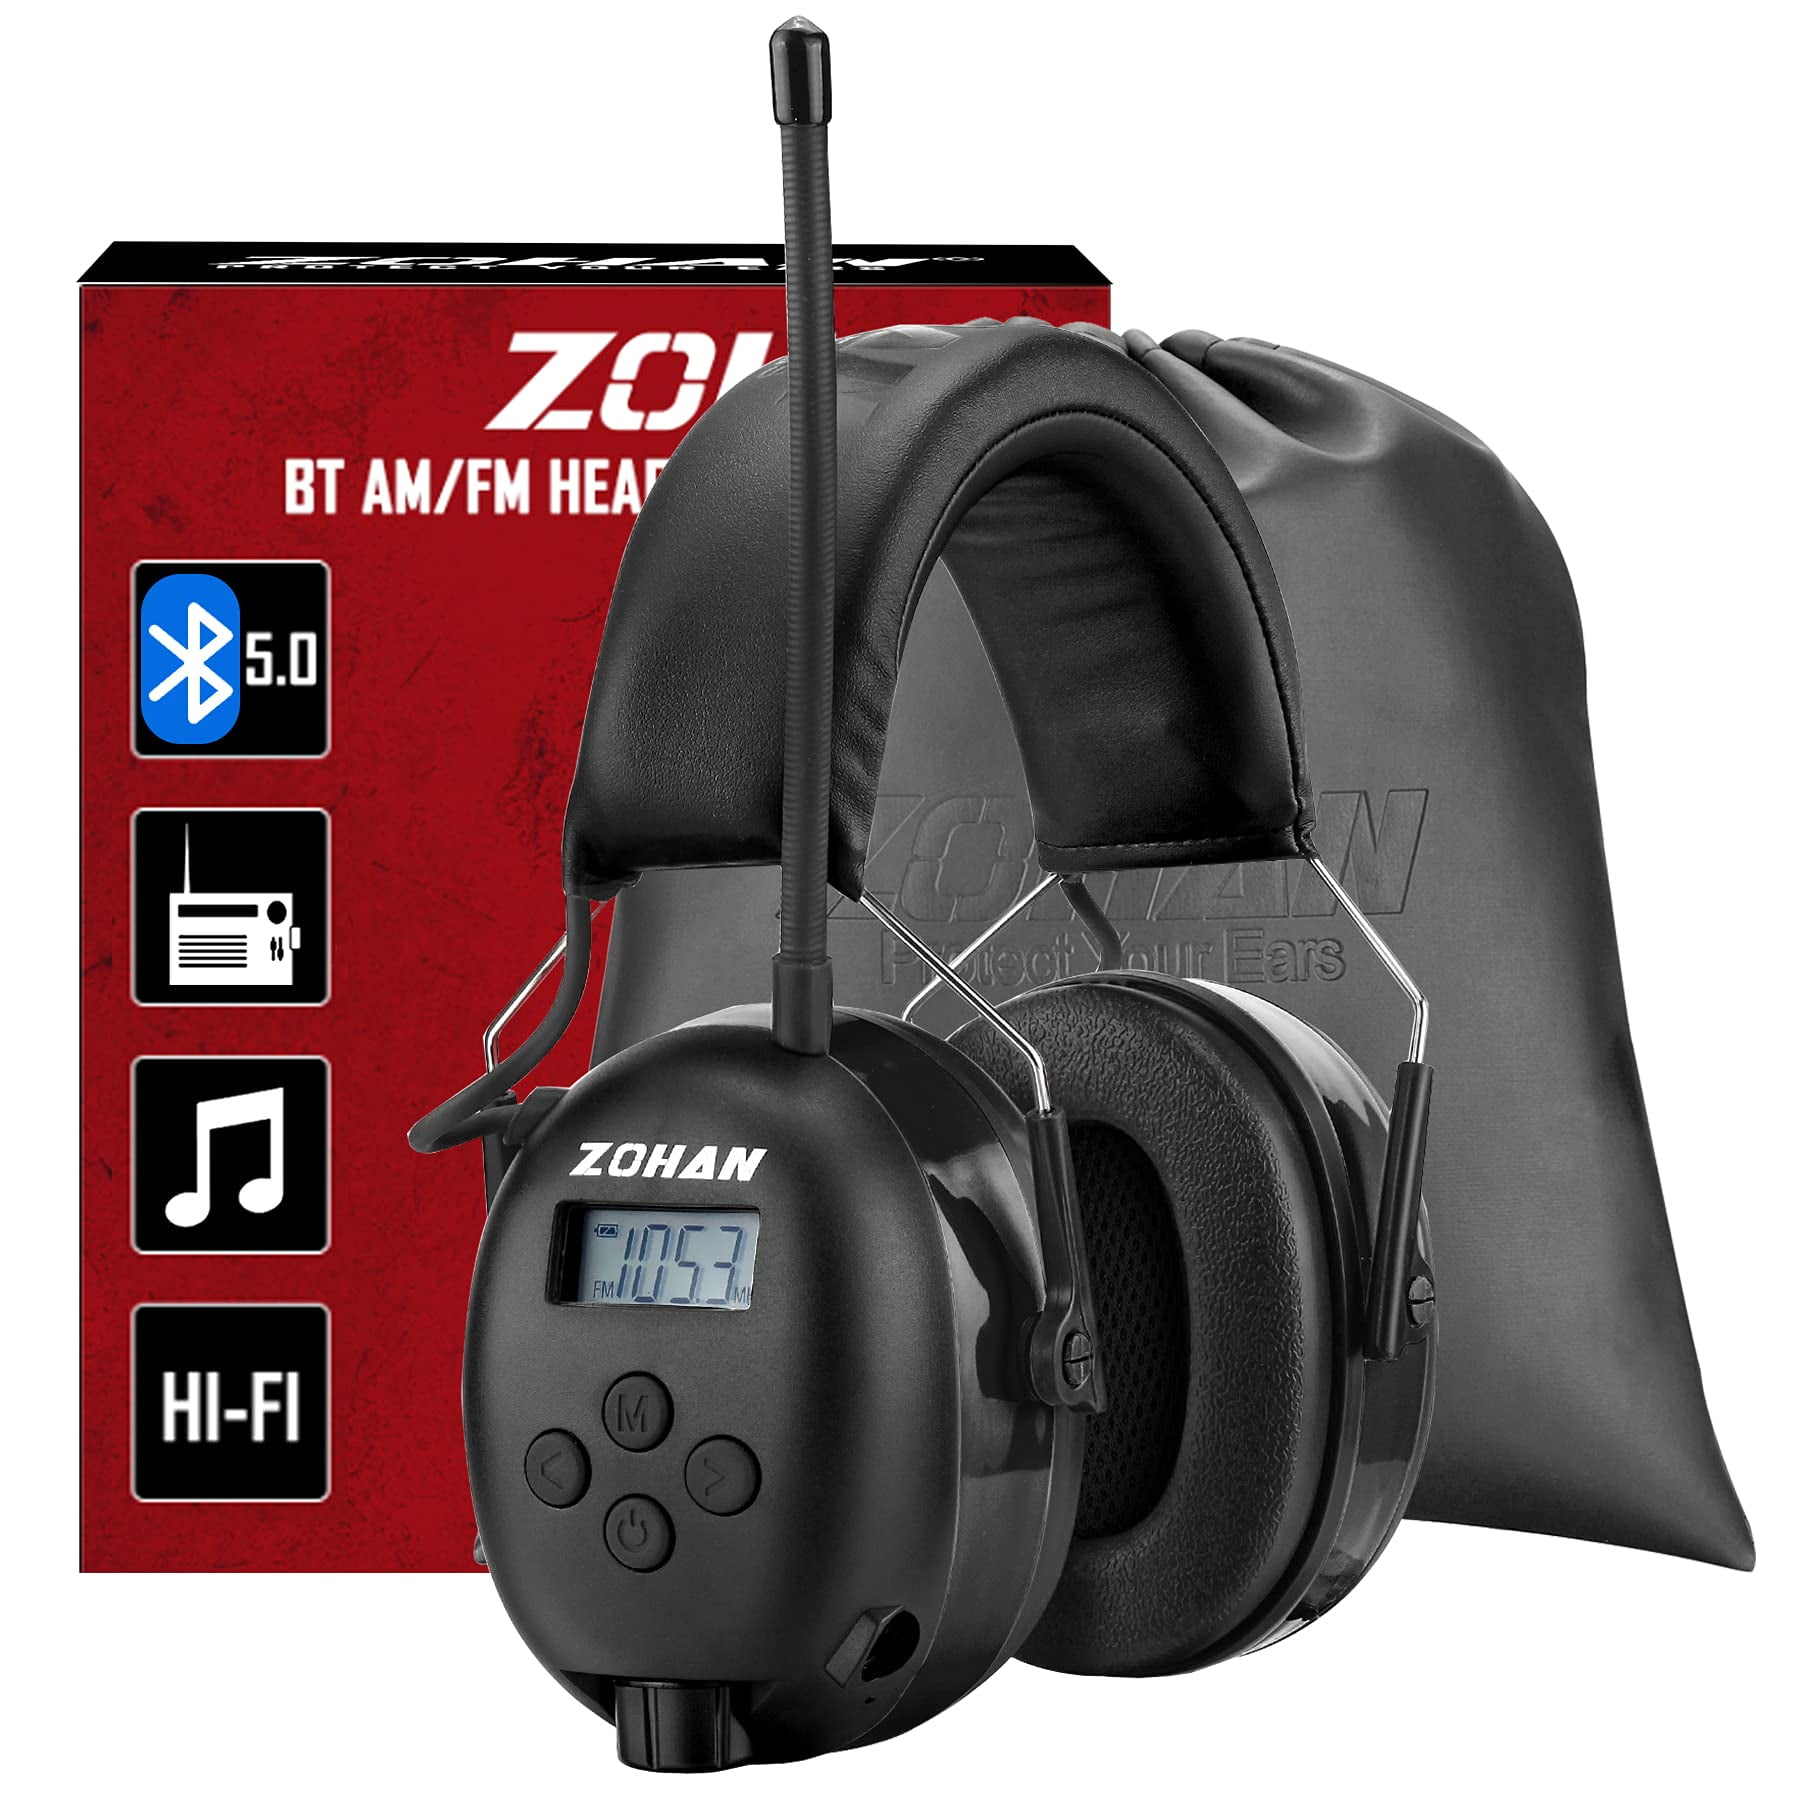 Perpetual Engel rent ZOHAN 033 Bluetooth 5.0 AM FM Radio Headphones with Digital Display, 25dB  NRR Noise Reduction - Walmart.com